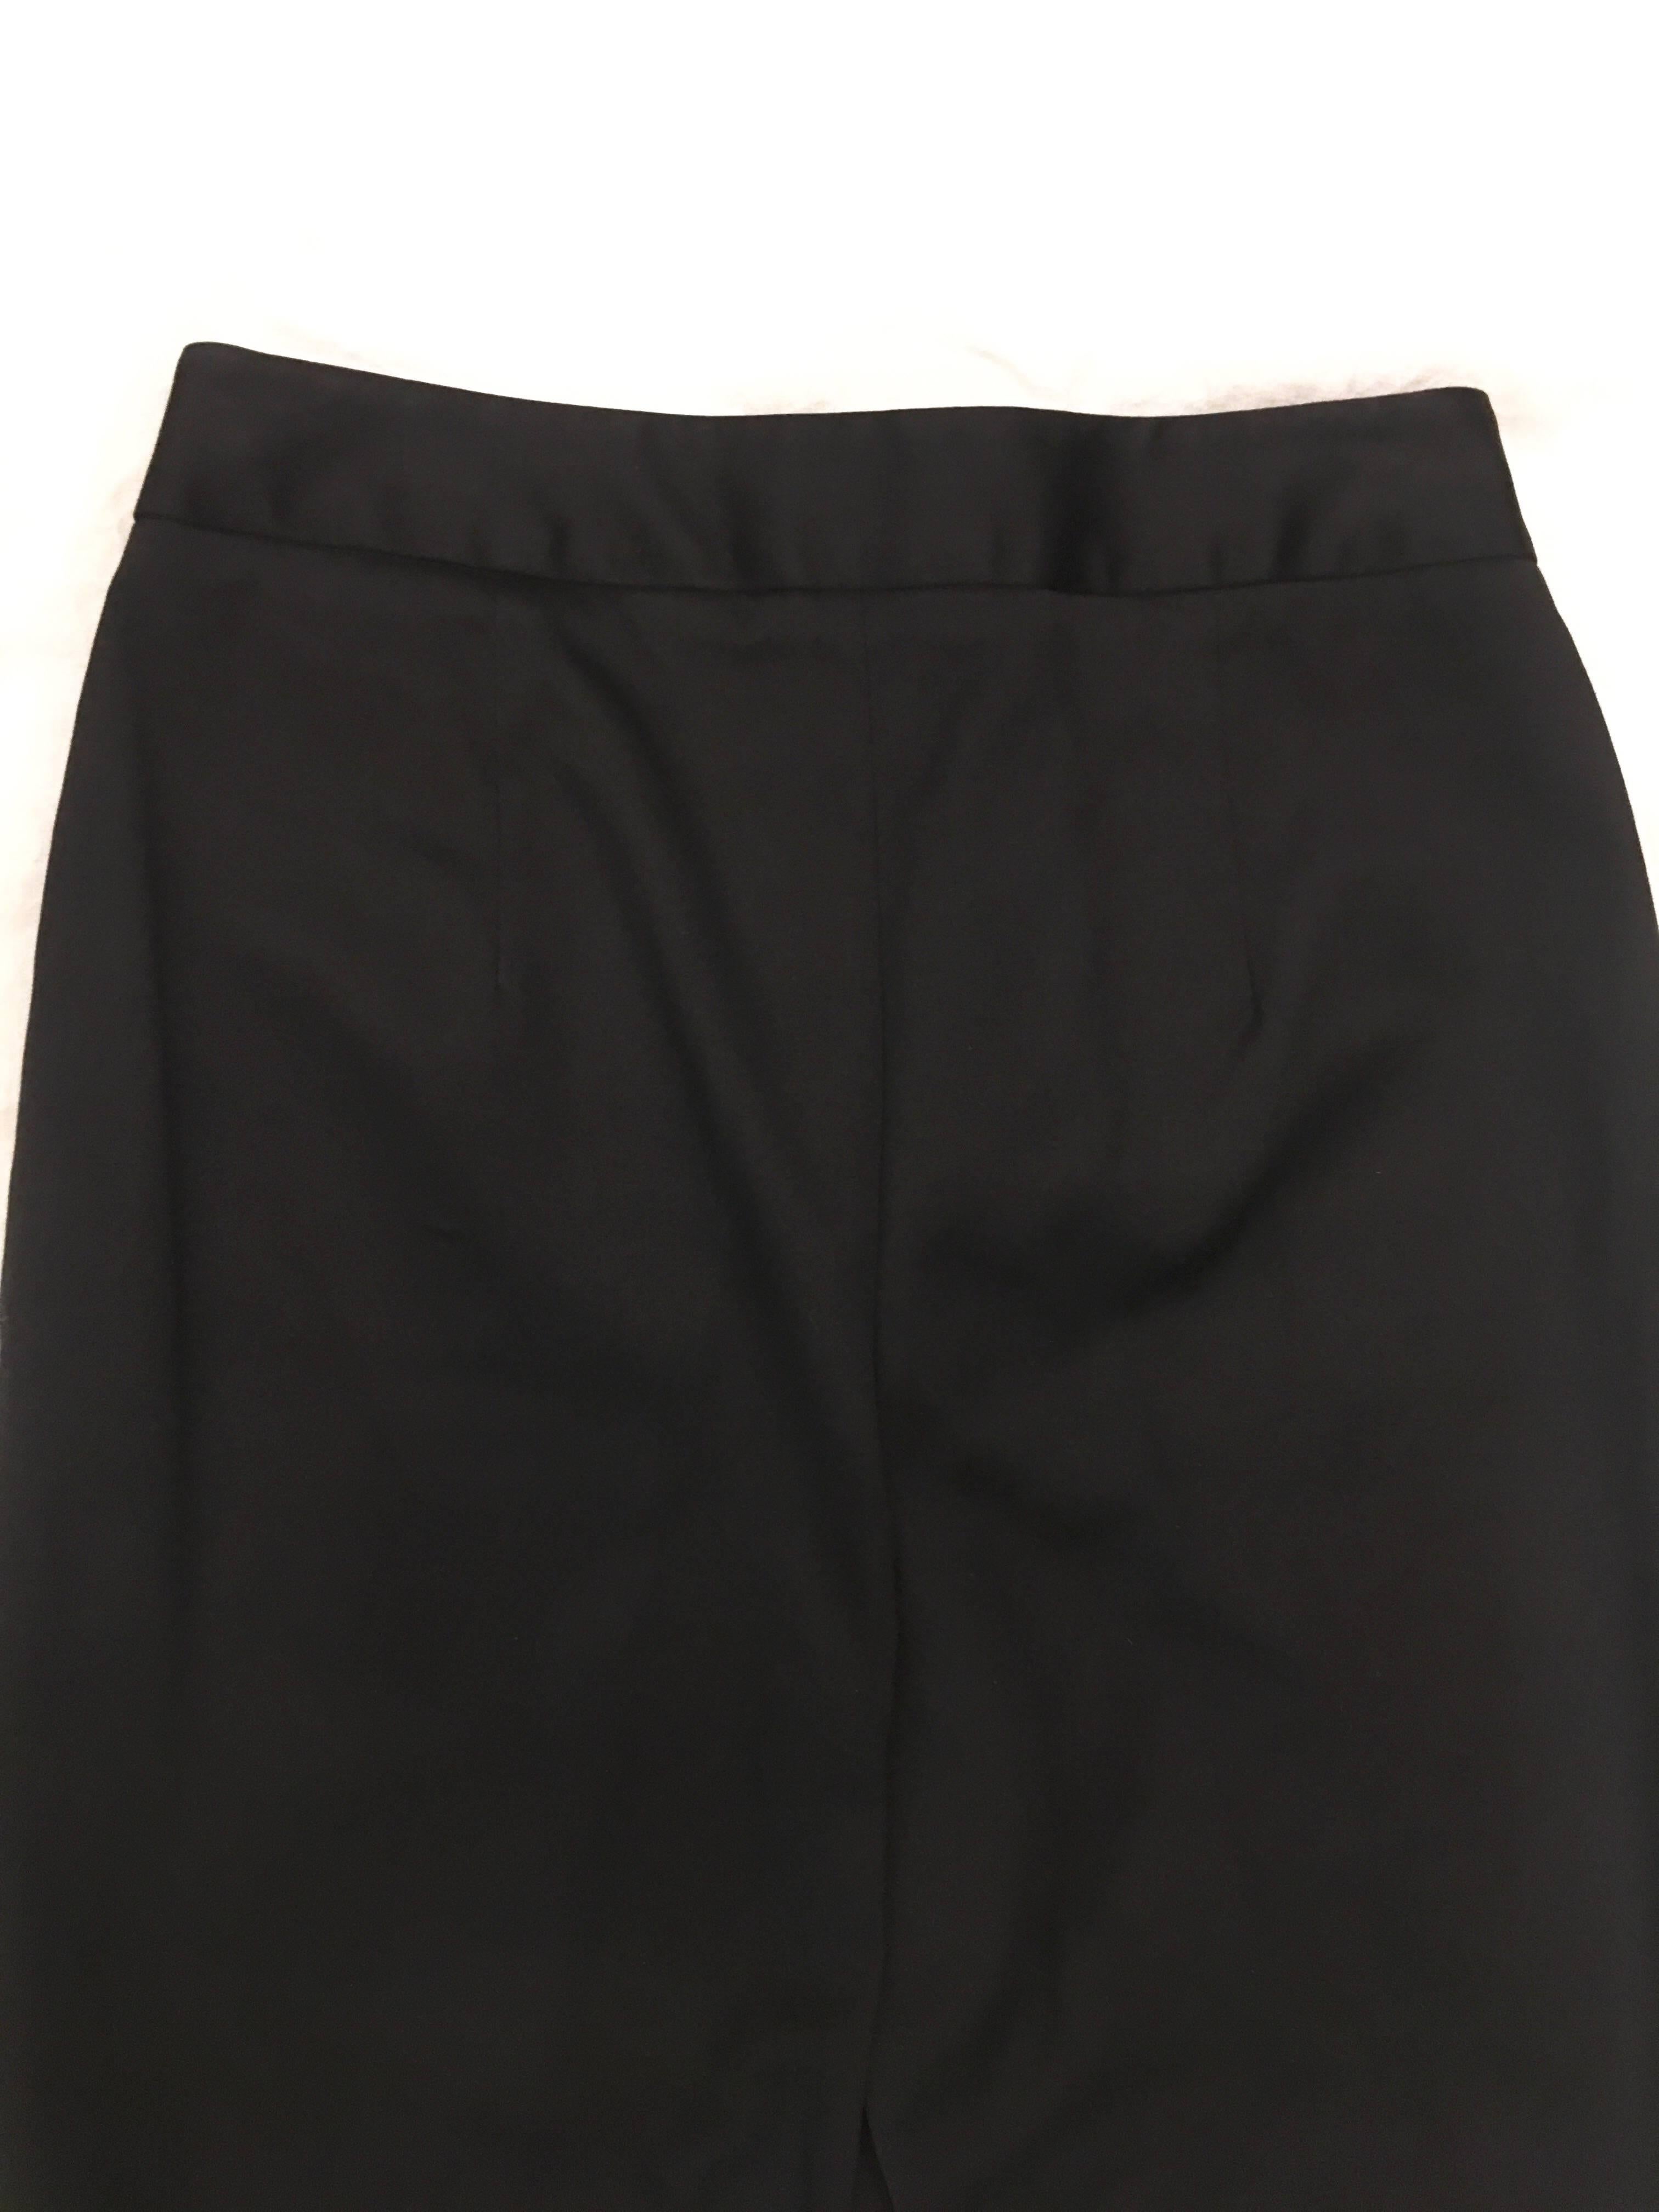 Dolce & Gabbana Black Slim Fit Pants For Sale 2